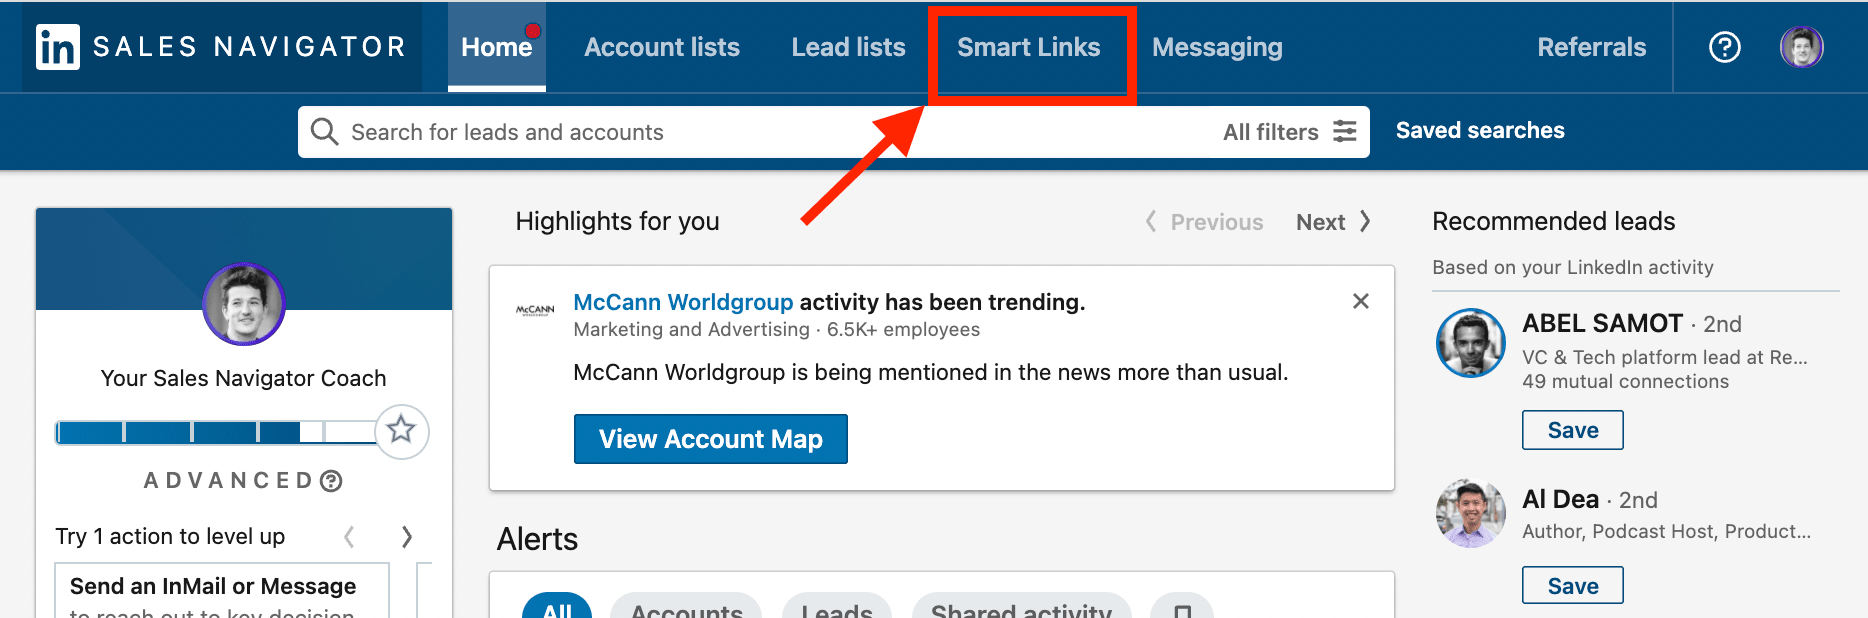 sales navigator smart links tab 